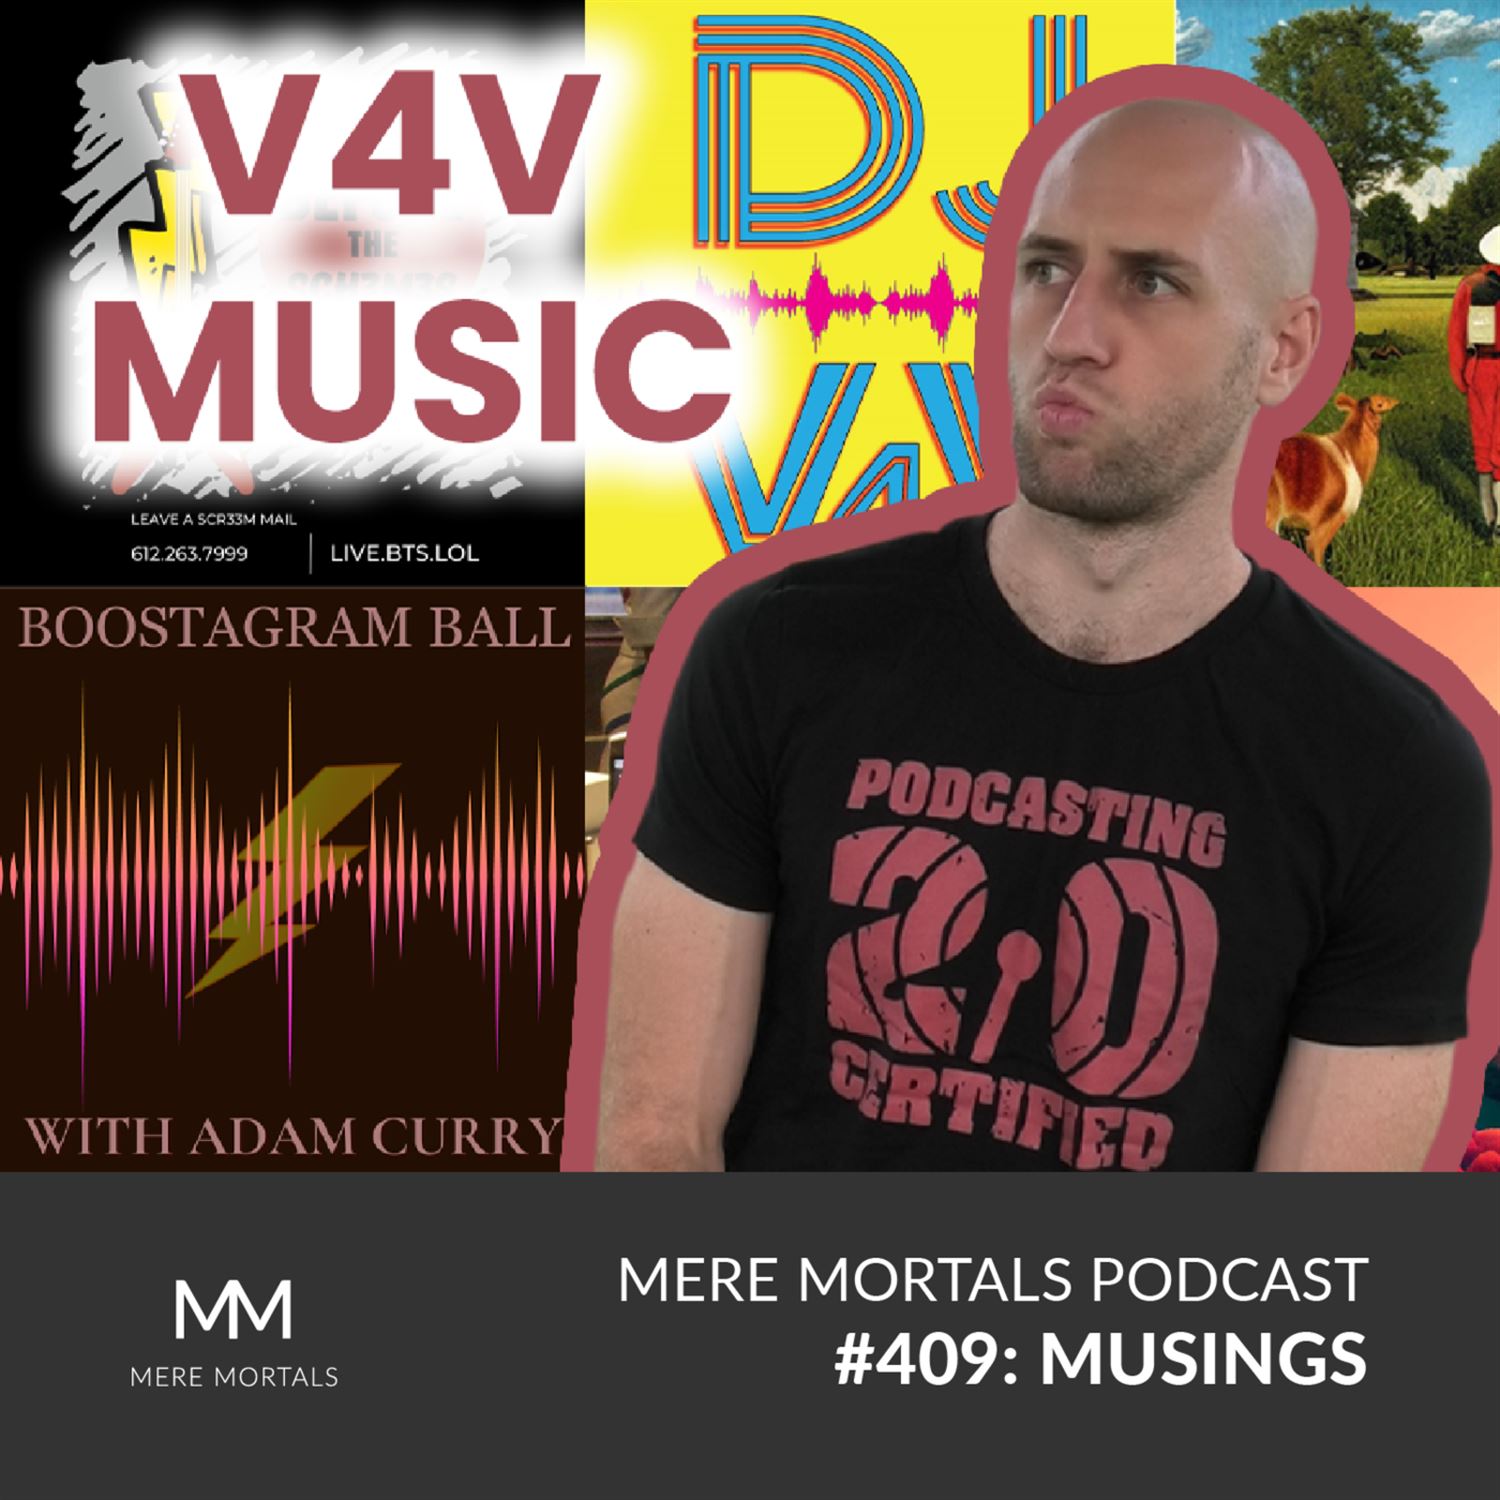 V4V Music is disruptive